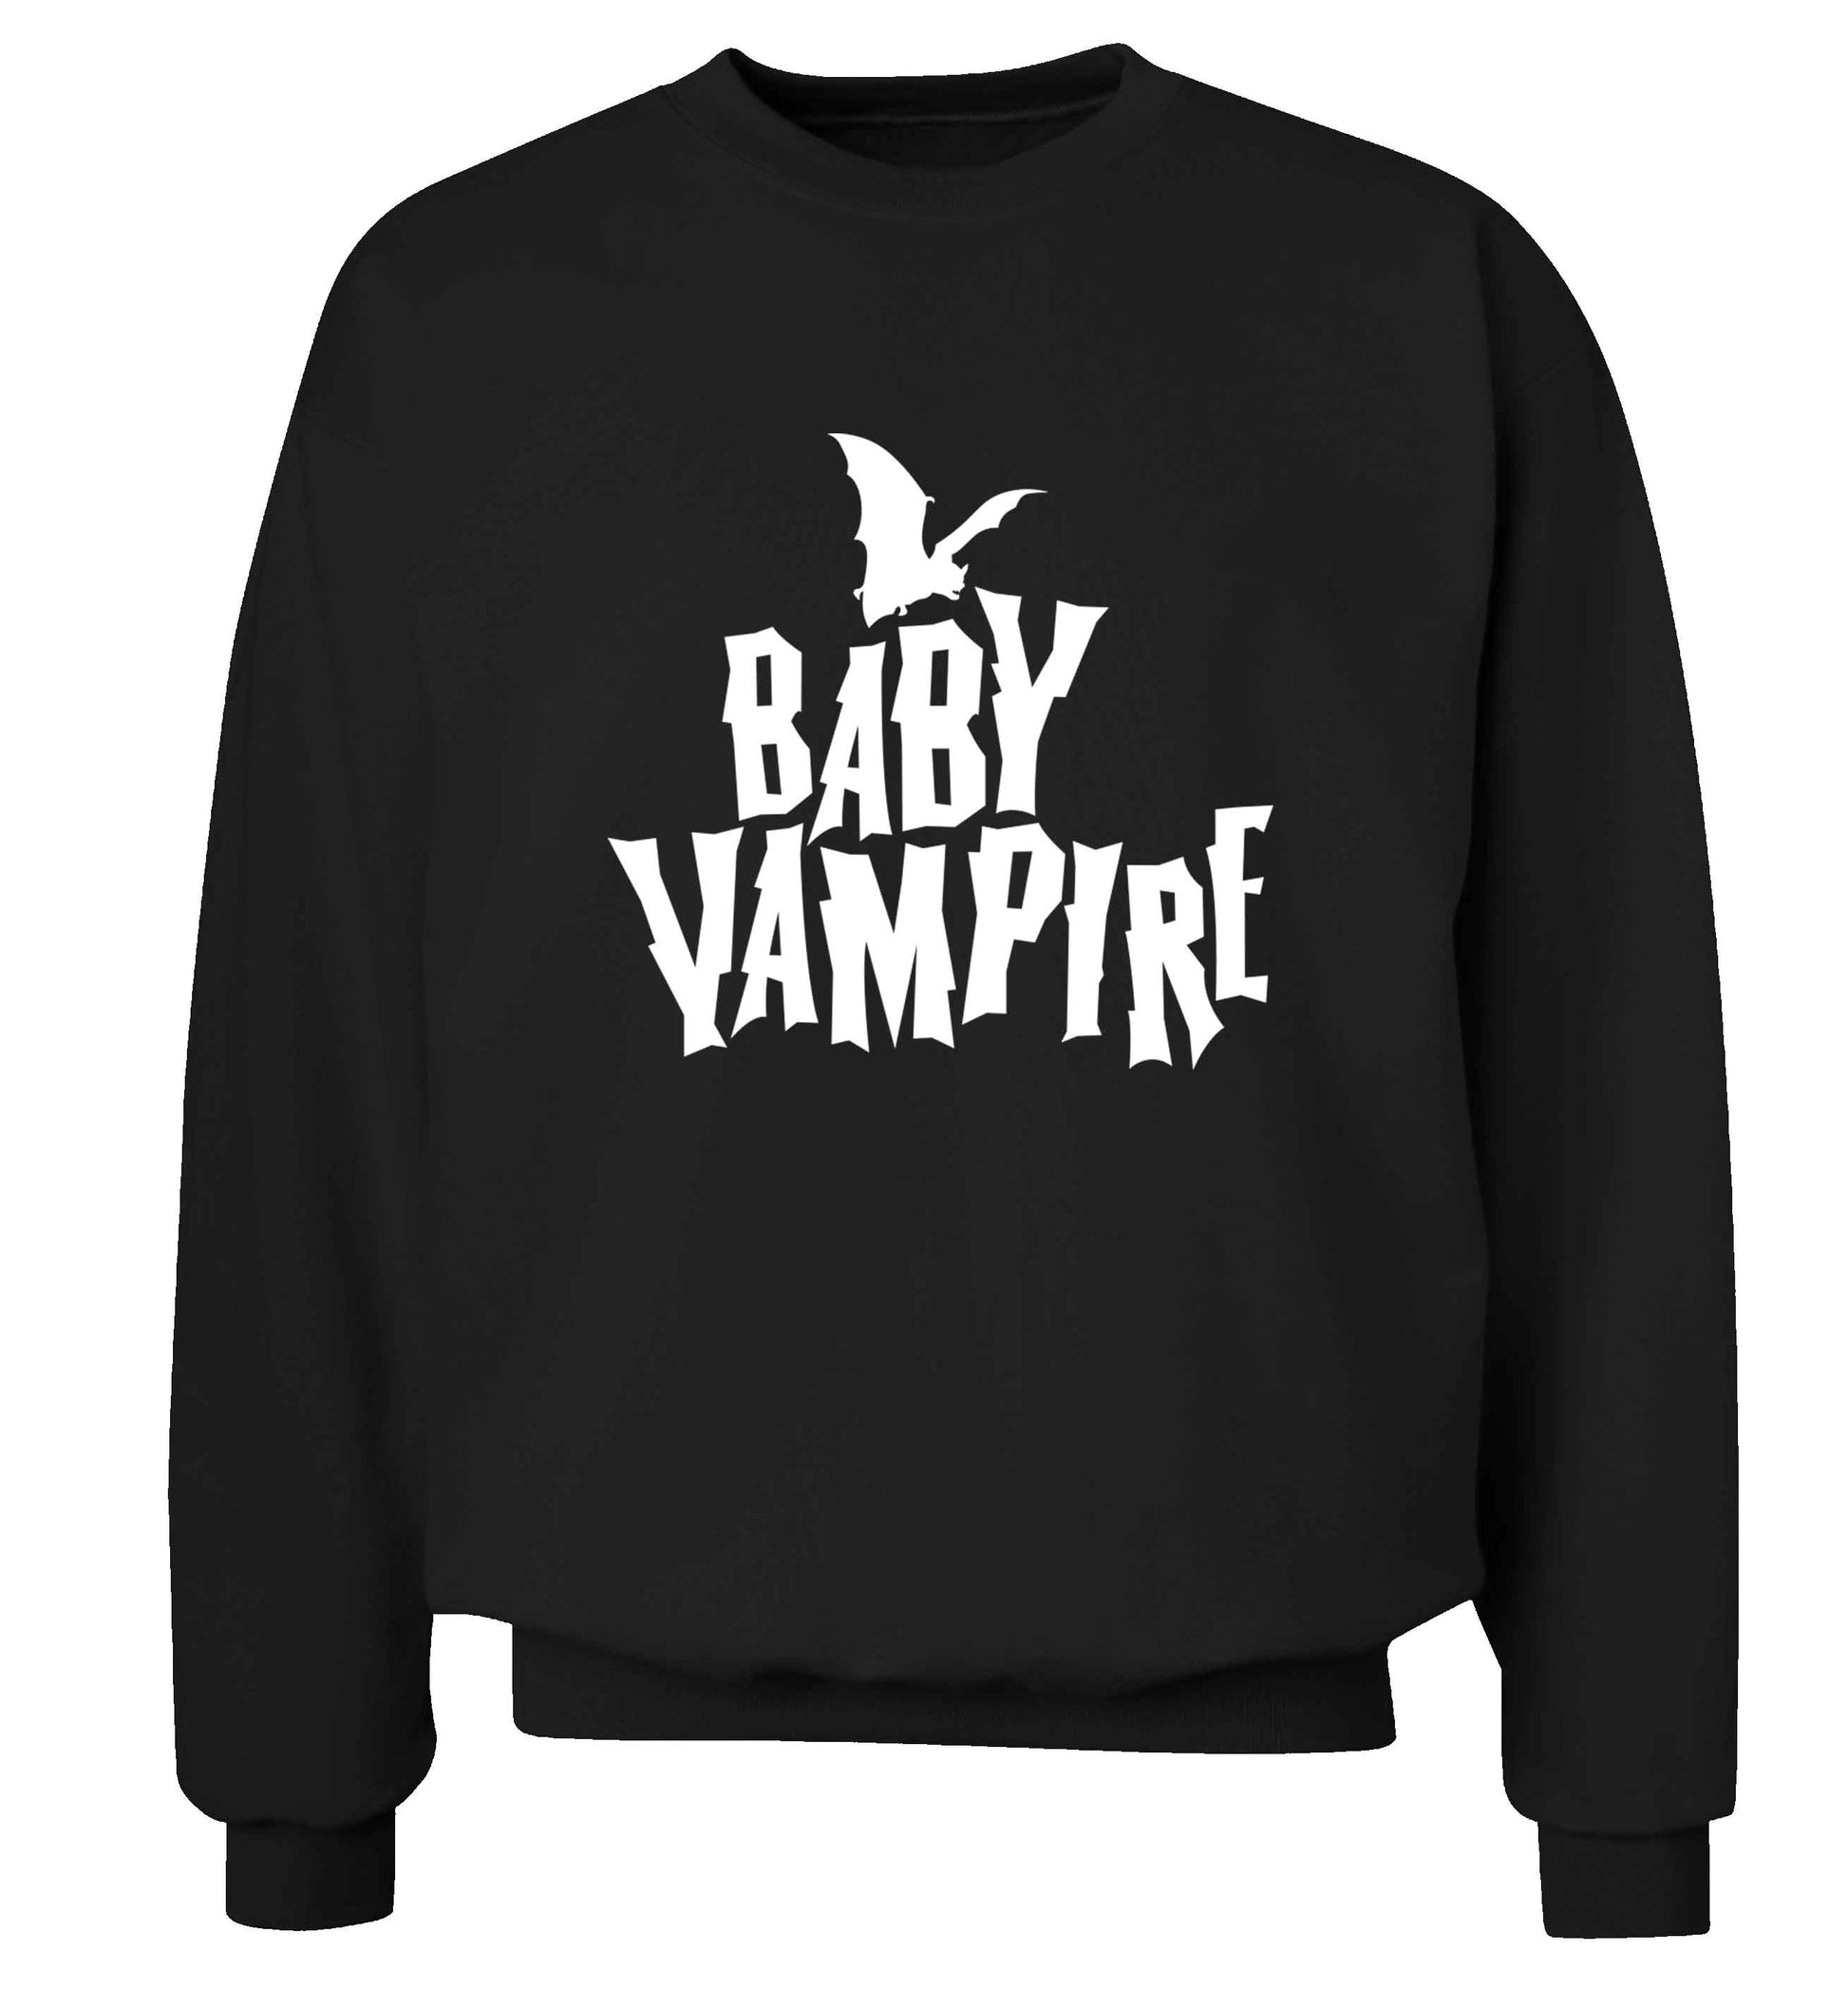 Baby vampire adult's unisex black sweater 2XL